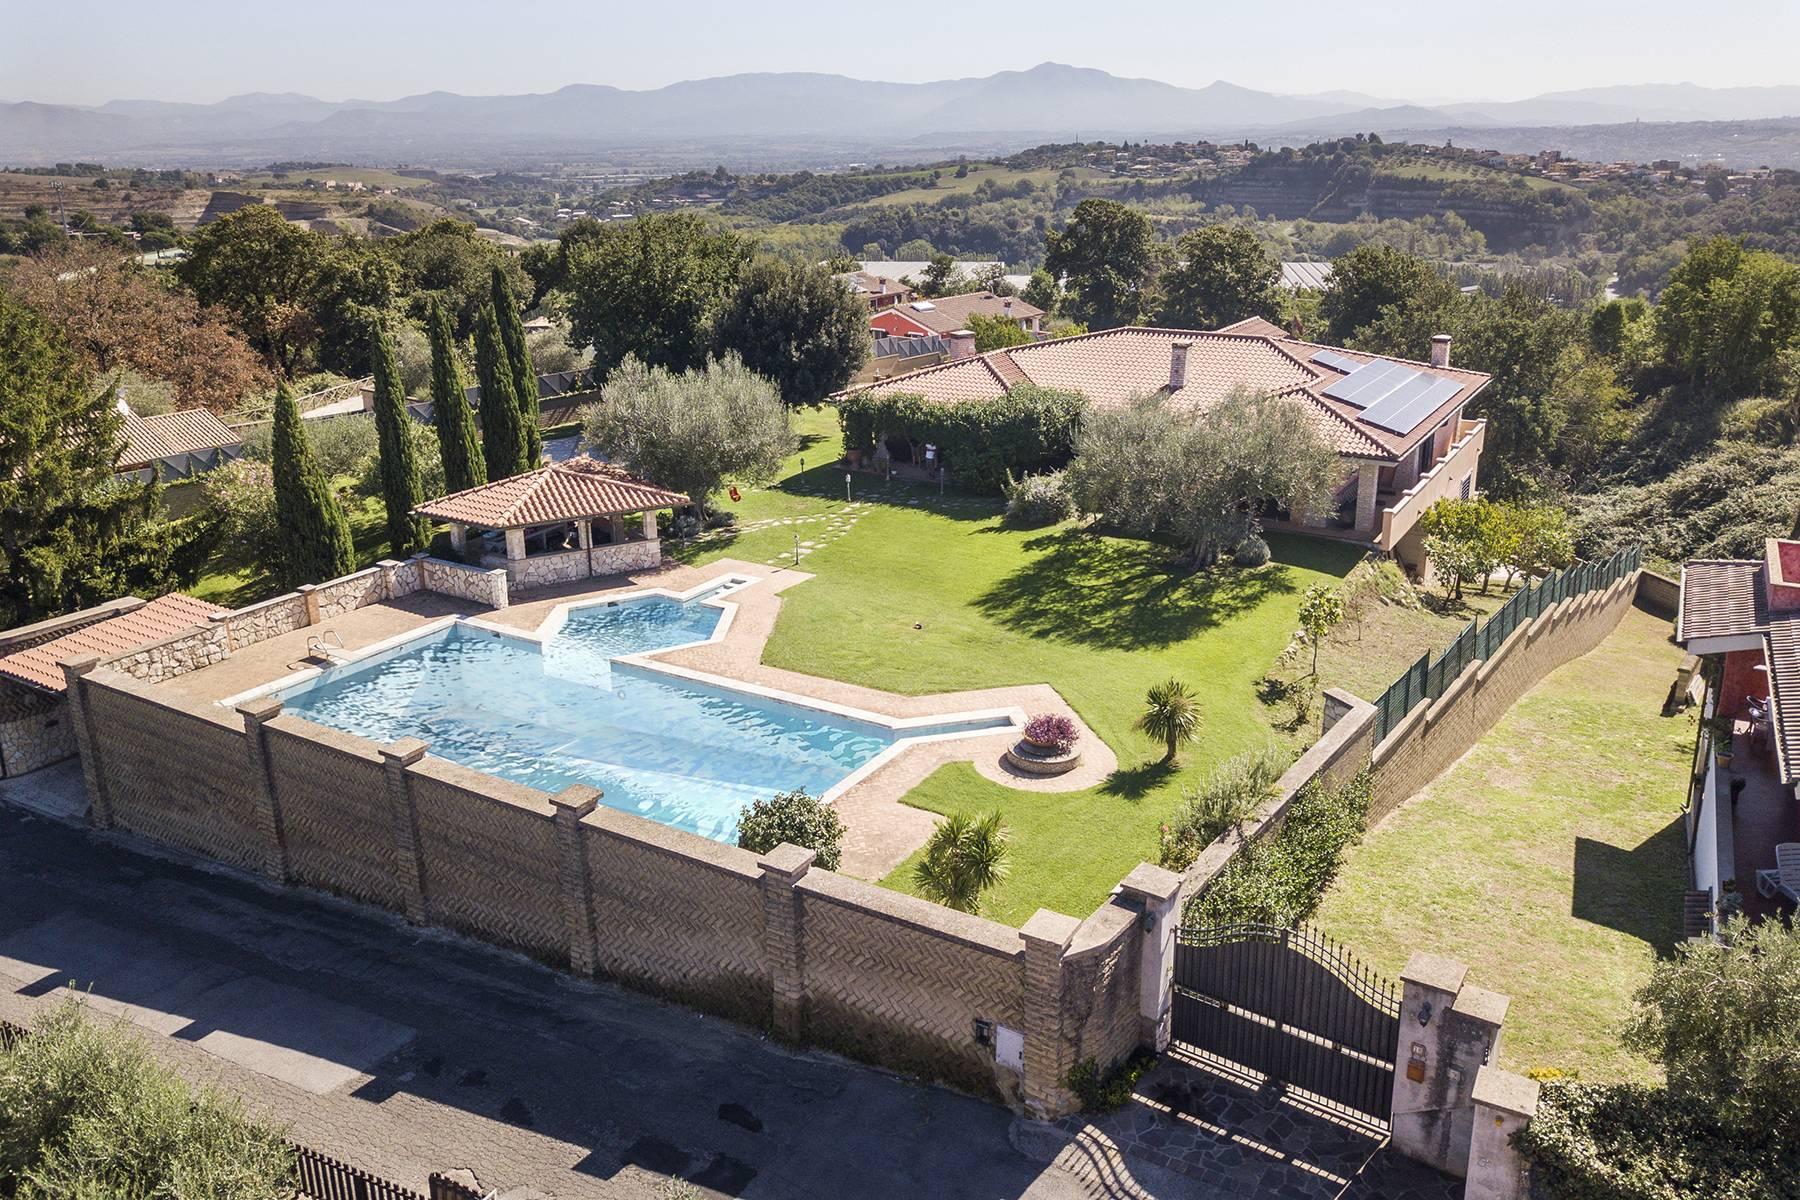 Moderna villa con piscina a due passi da Roma - 1